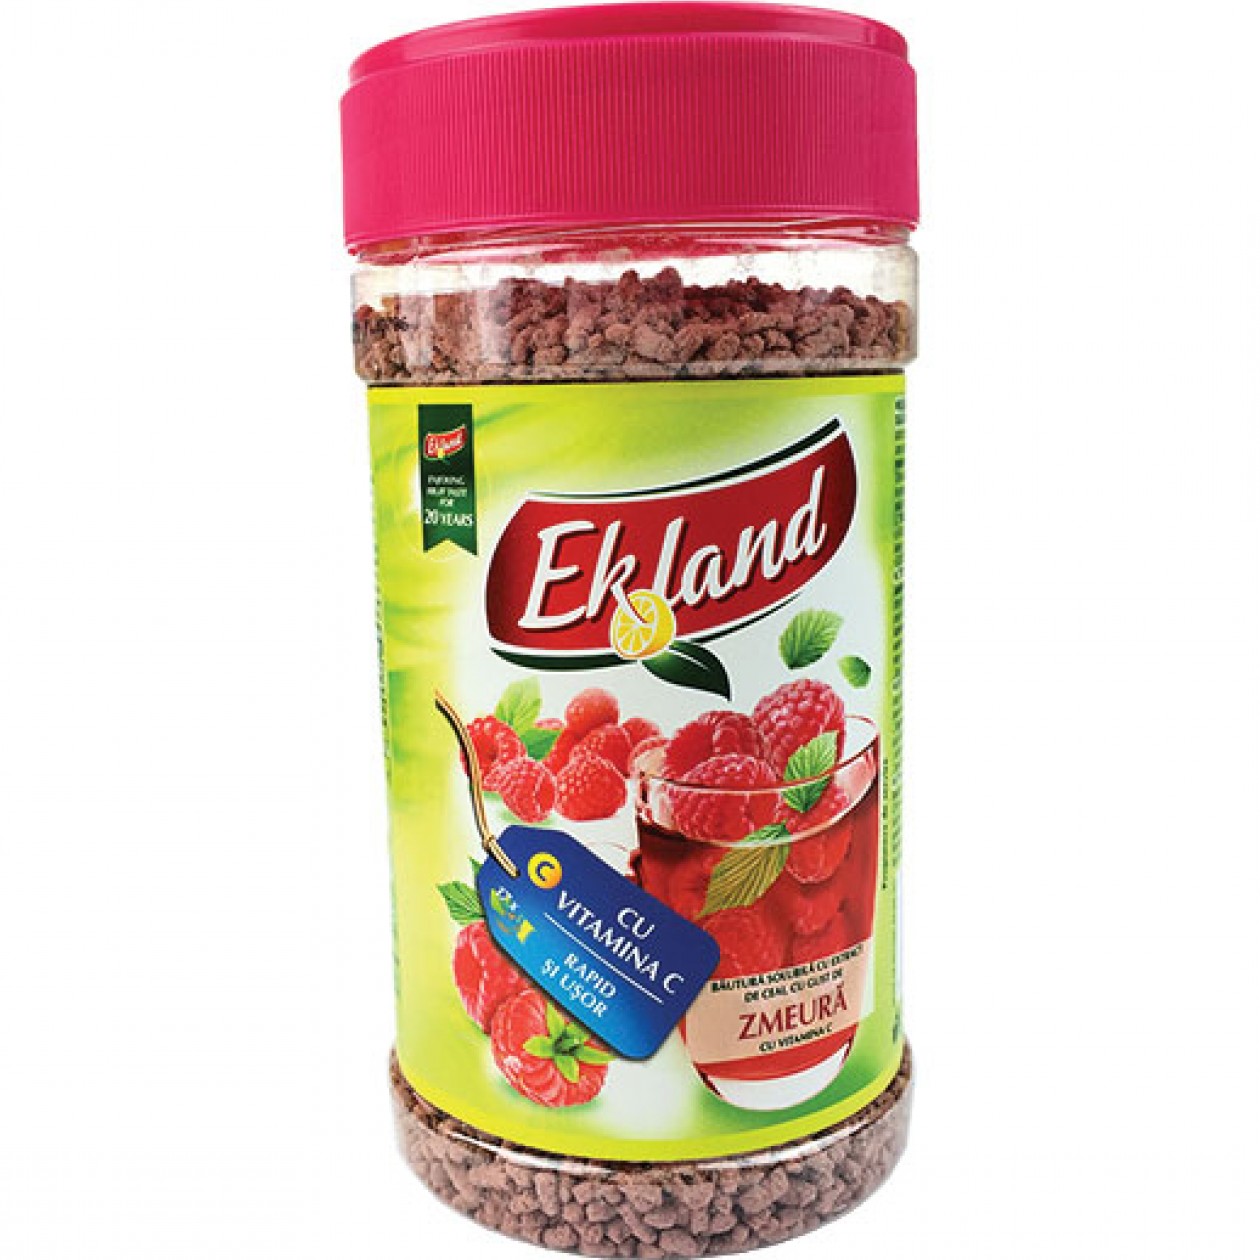 Ekoland Tea (Jar) Raspberry Drink 350g